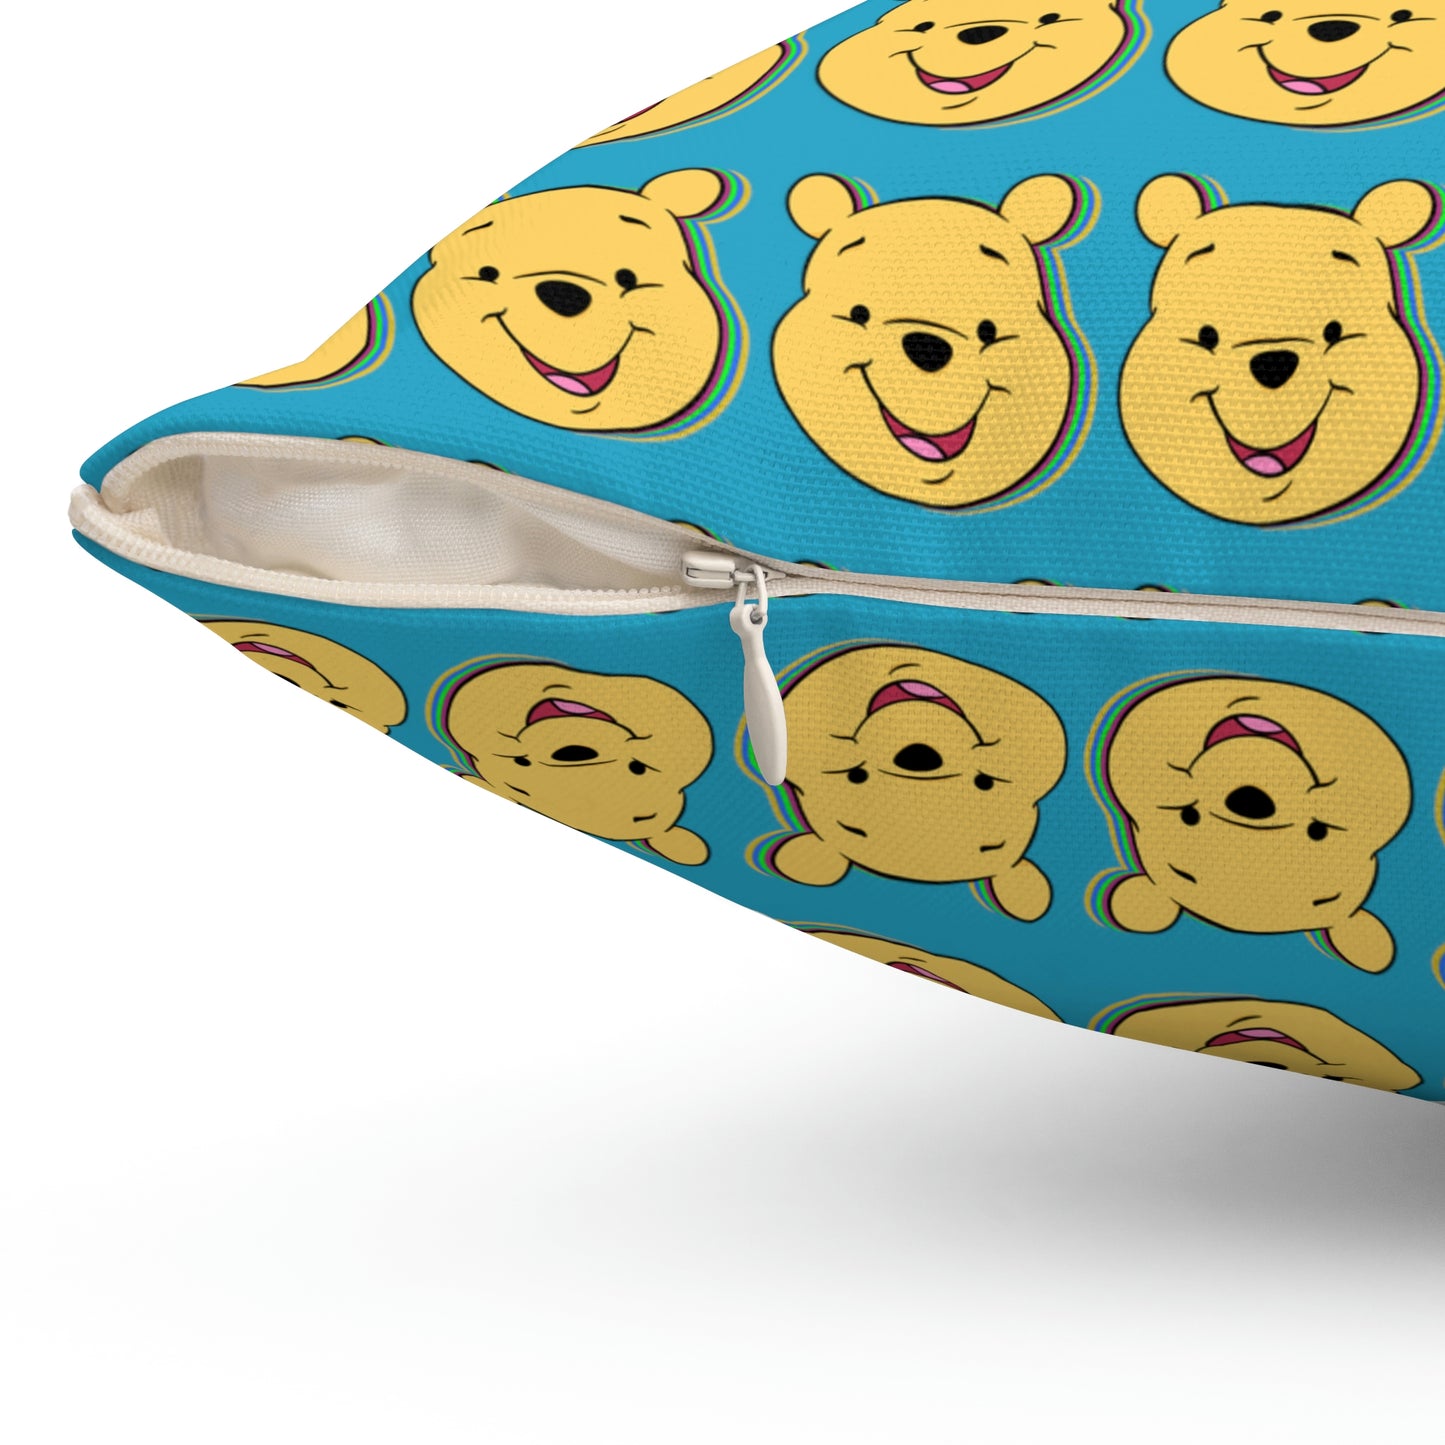 Spun Polyester Square Pillow Case “Trip Pooh on Turquoise”